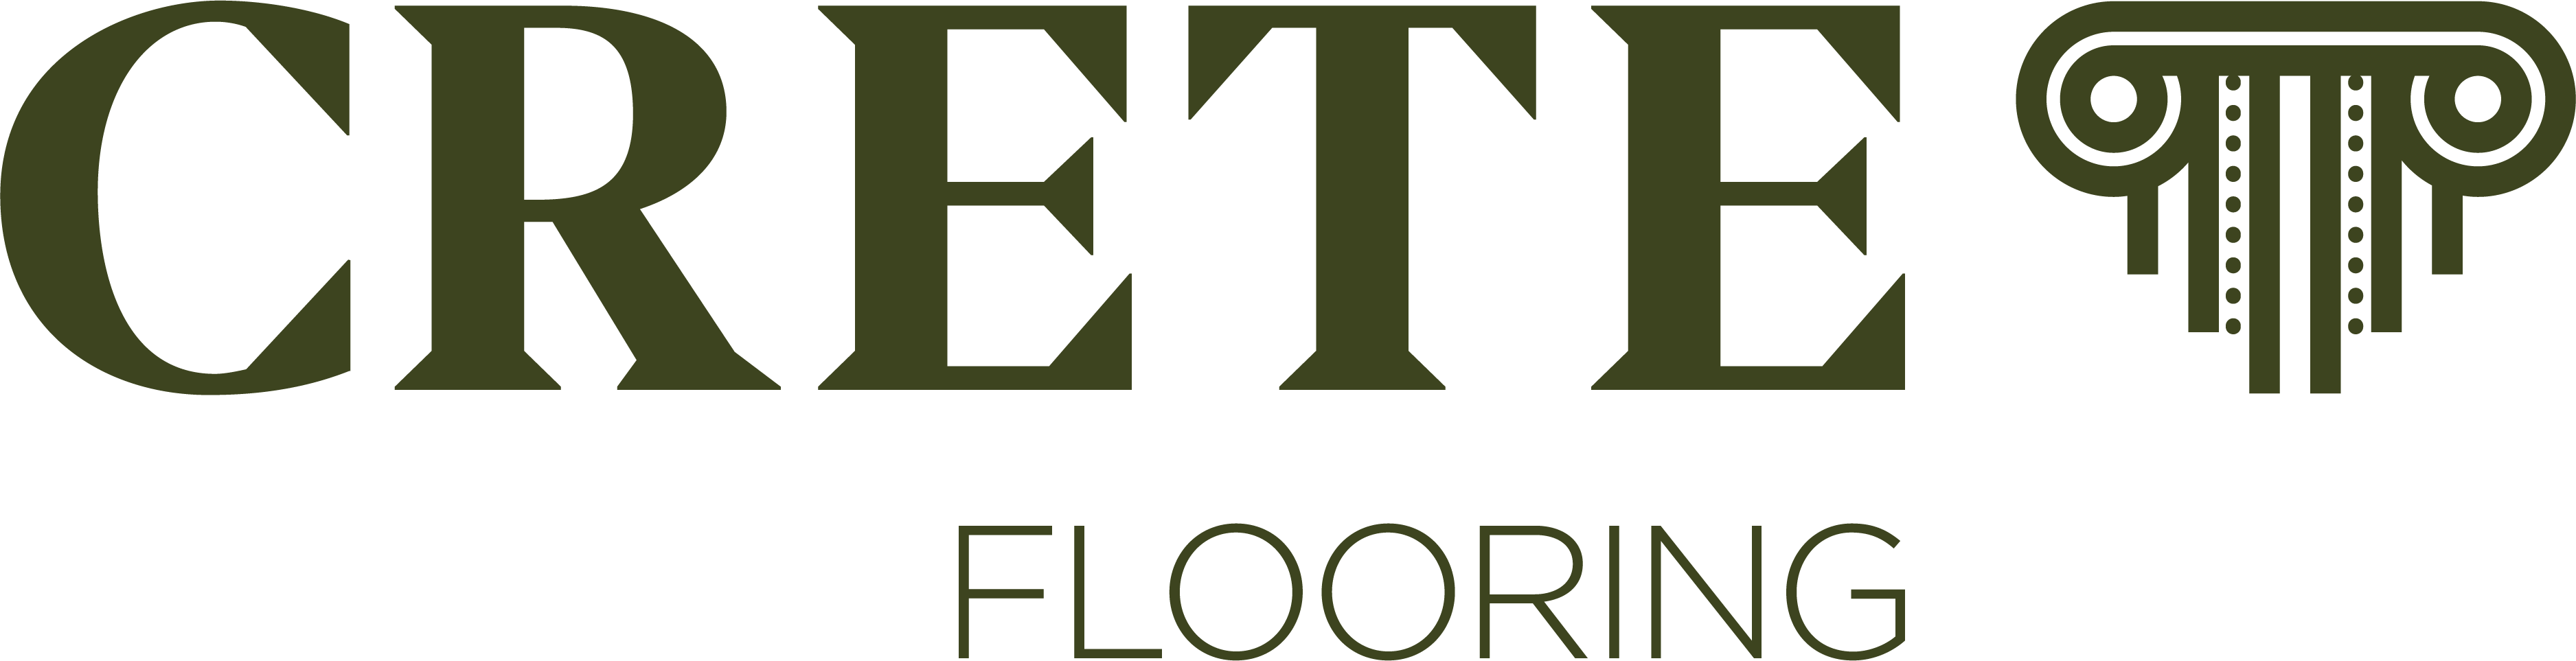 Crete Logo - Crete Flooring - Woodland Lifestyle